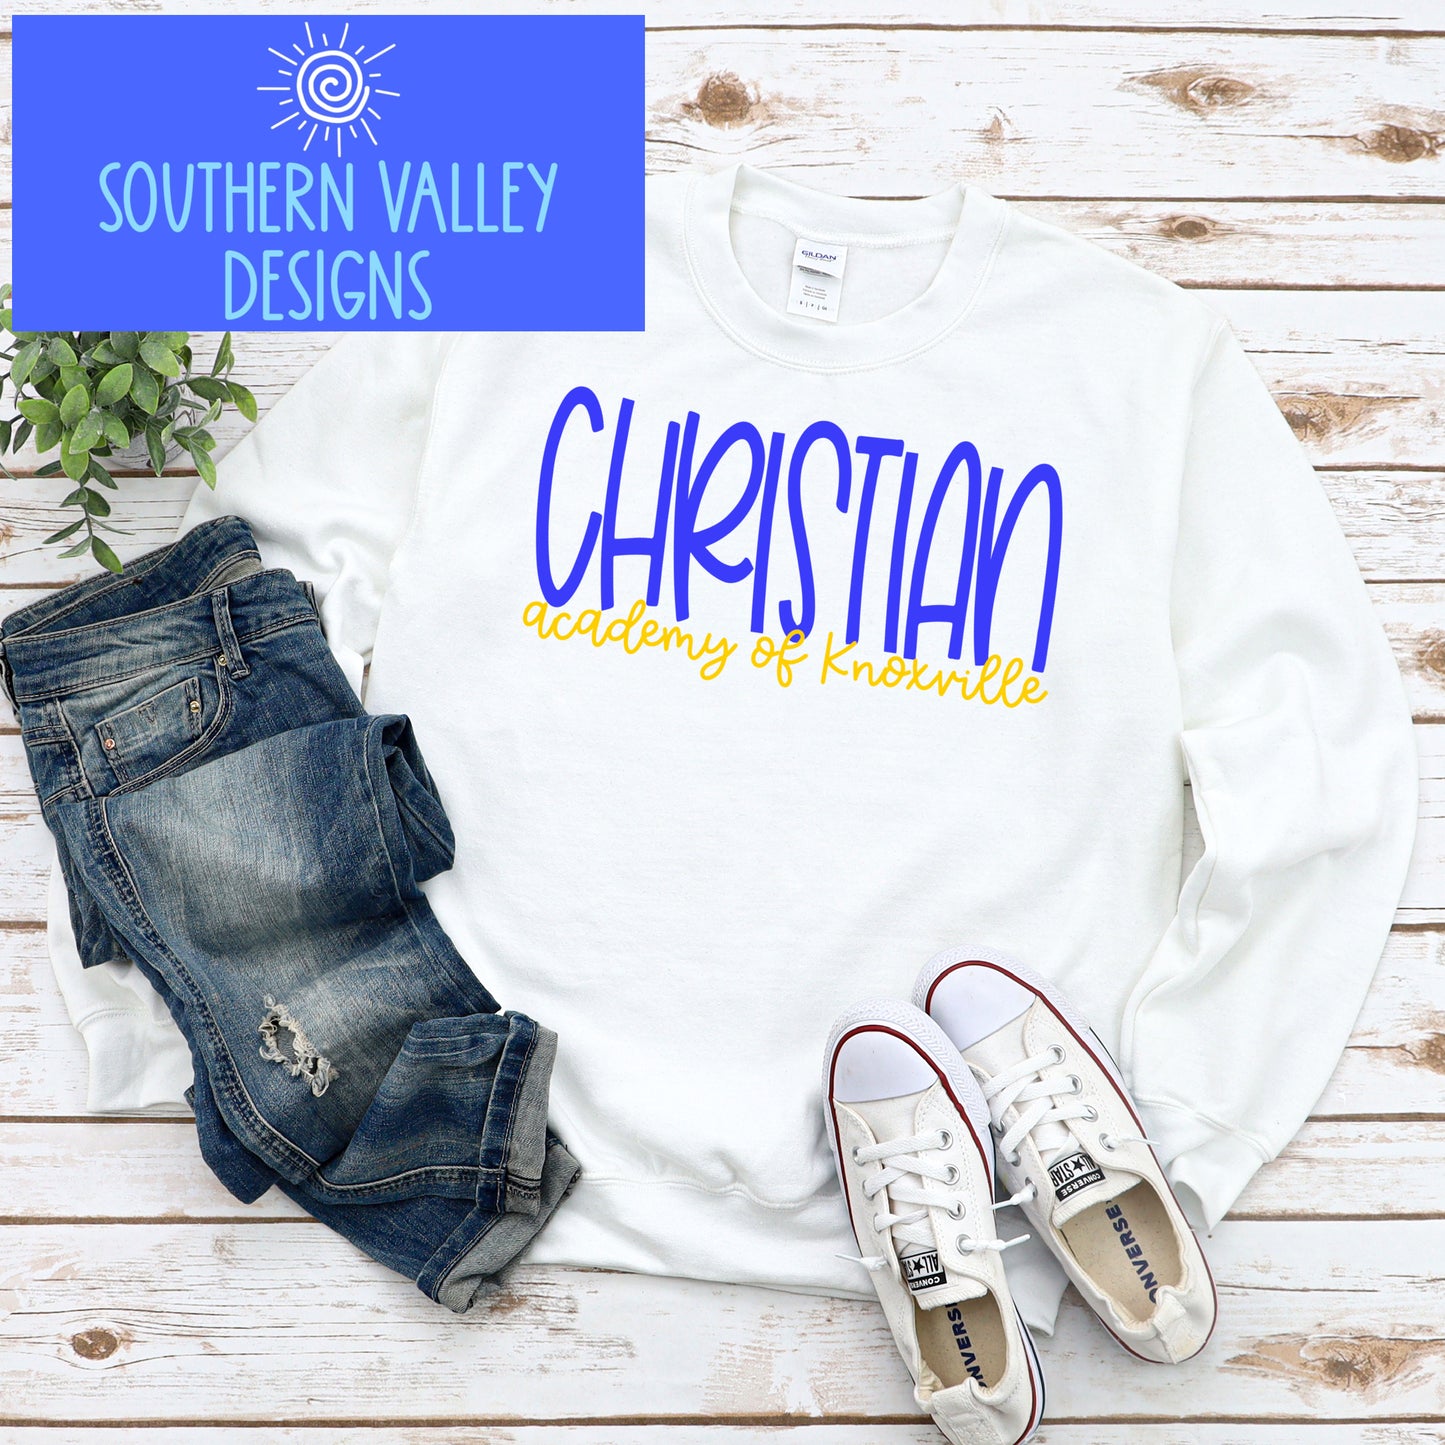 Christian Academy of Knoxville School Spirit CM Design